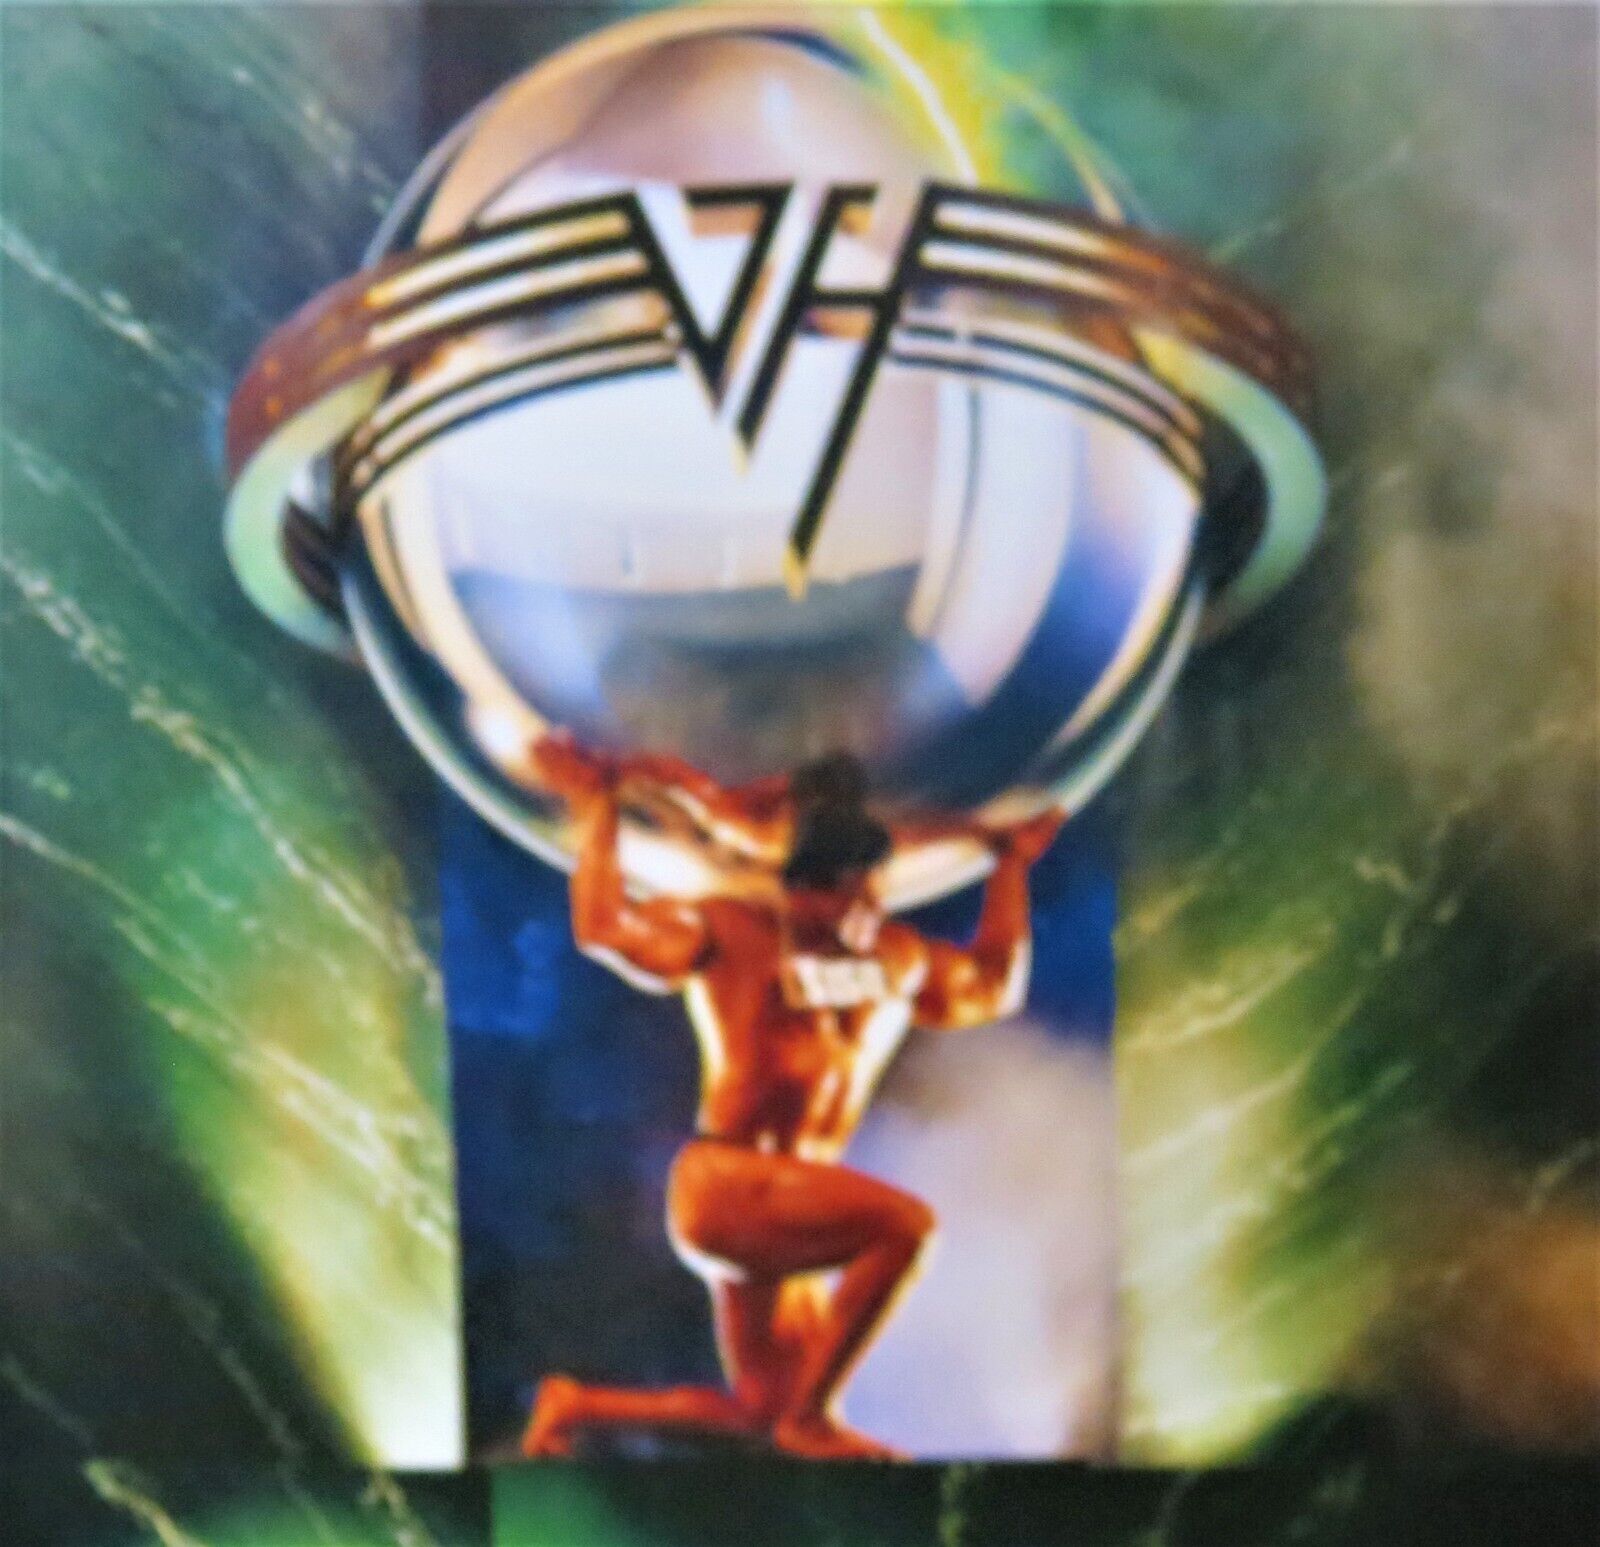 Van Halen 5150, NEW CD Eddie Van Halen, Sammy Hagar, Alex Van Halen, 9 Tracks